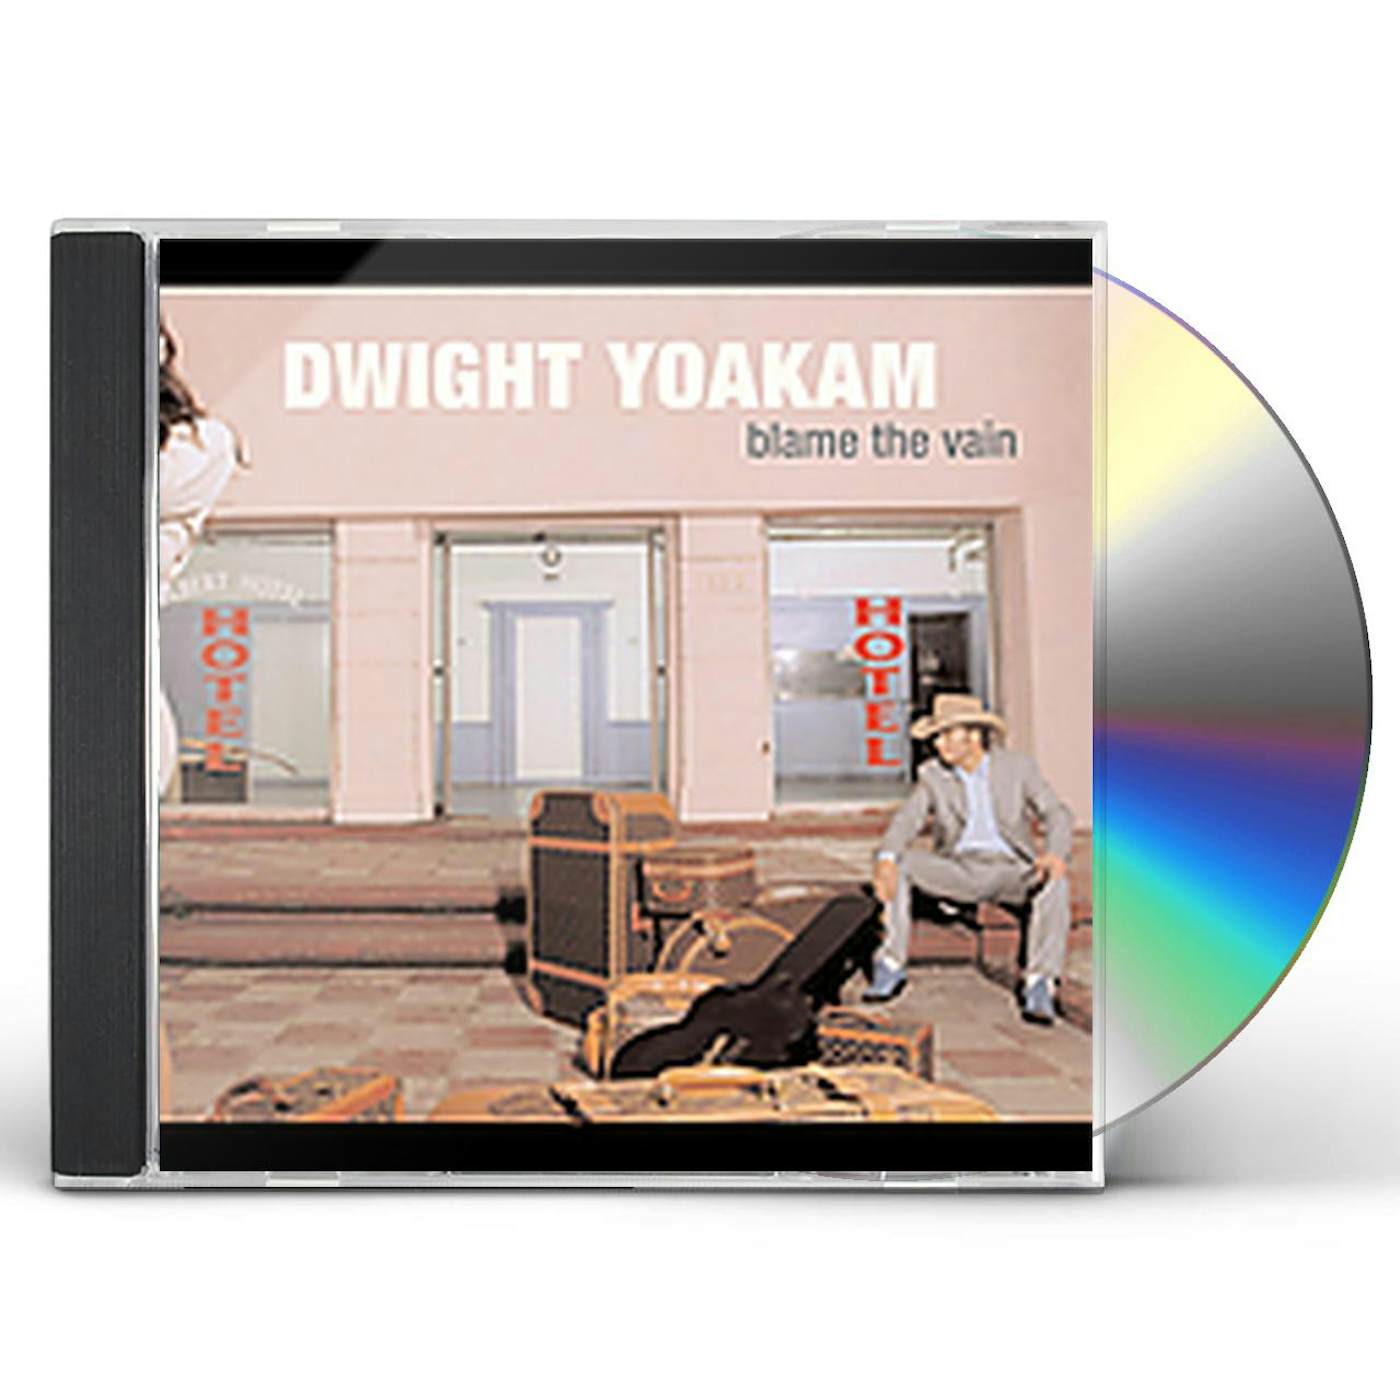 Dwight Yoakam BLAME THE VAIN CD